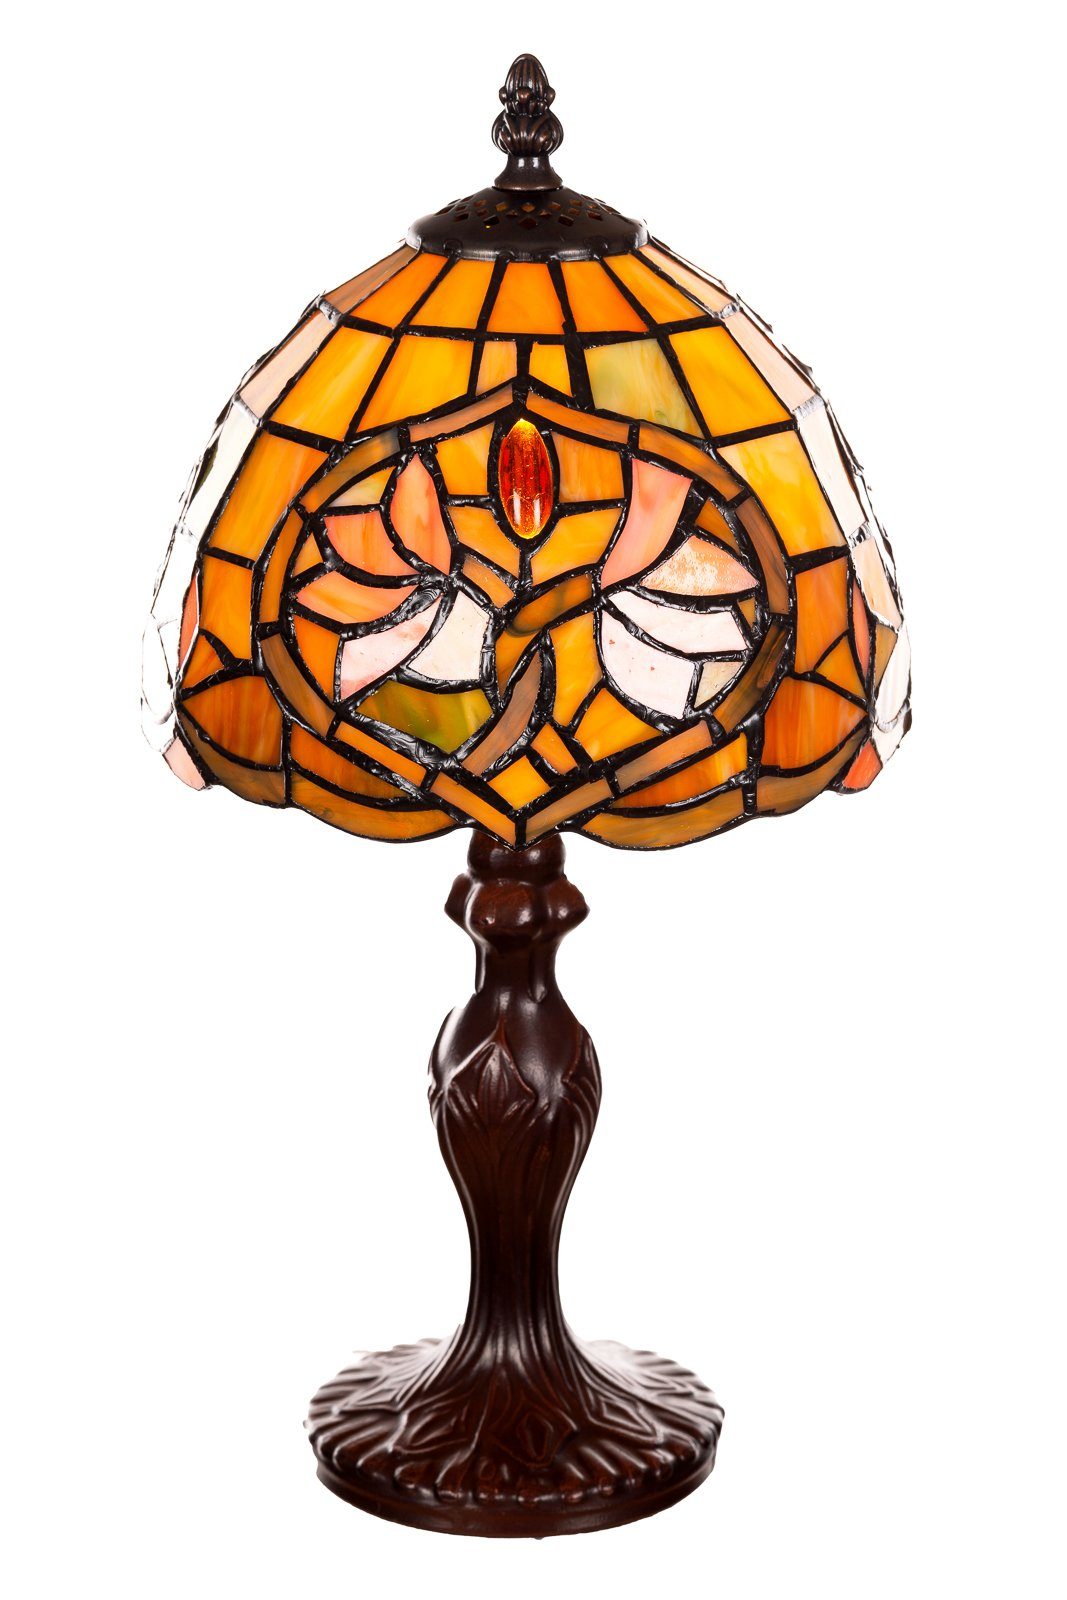 BIRENDY Dekorationslampe Motiv Tiffany Stehlampe Lampe Muster Tischlampe Mosaik Ti153